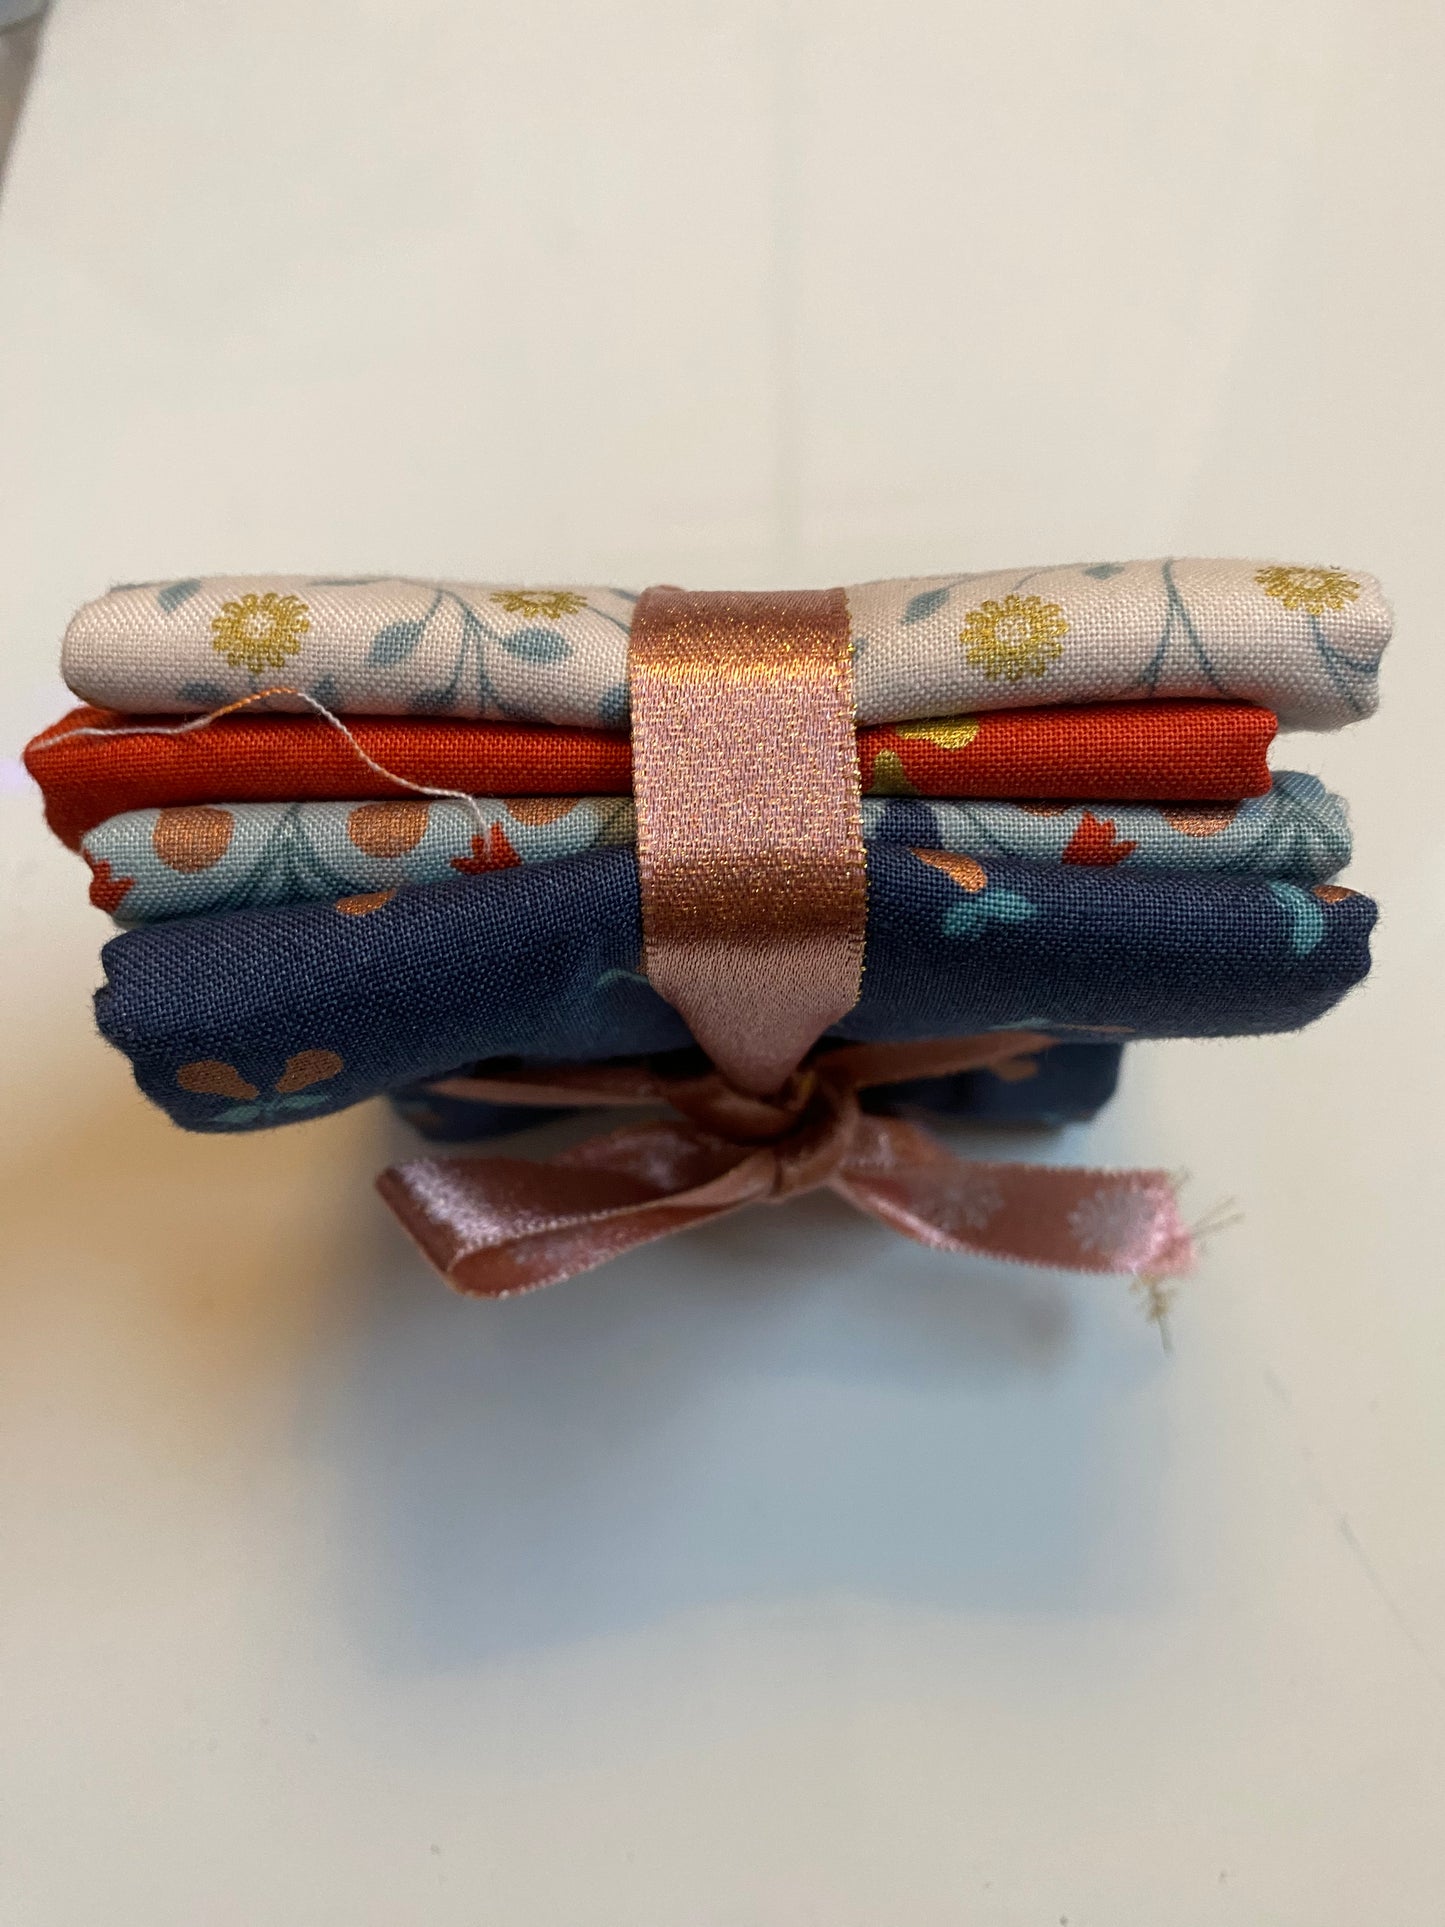 Fabric Fat Quarter Bundle - 'Summer Warmth' - 100% Cotton